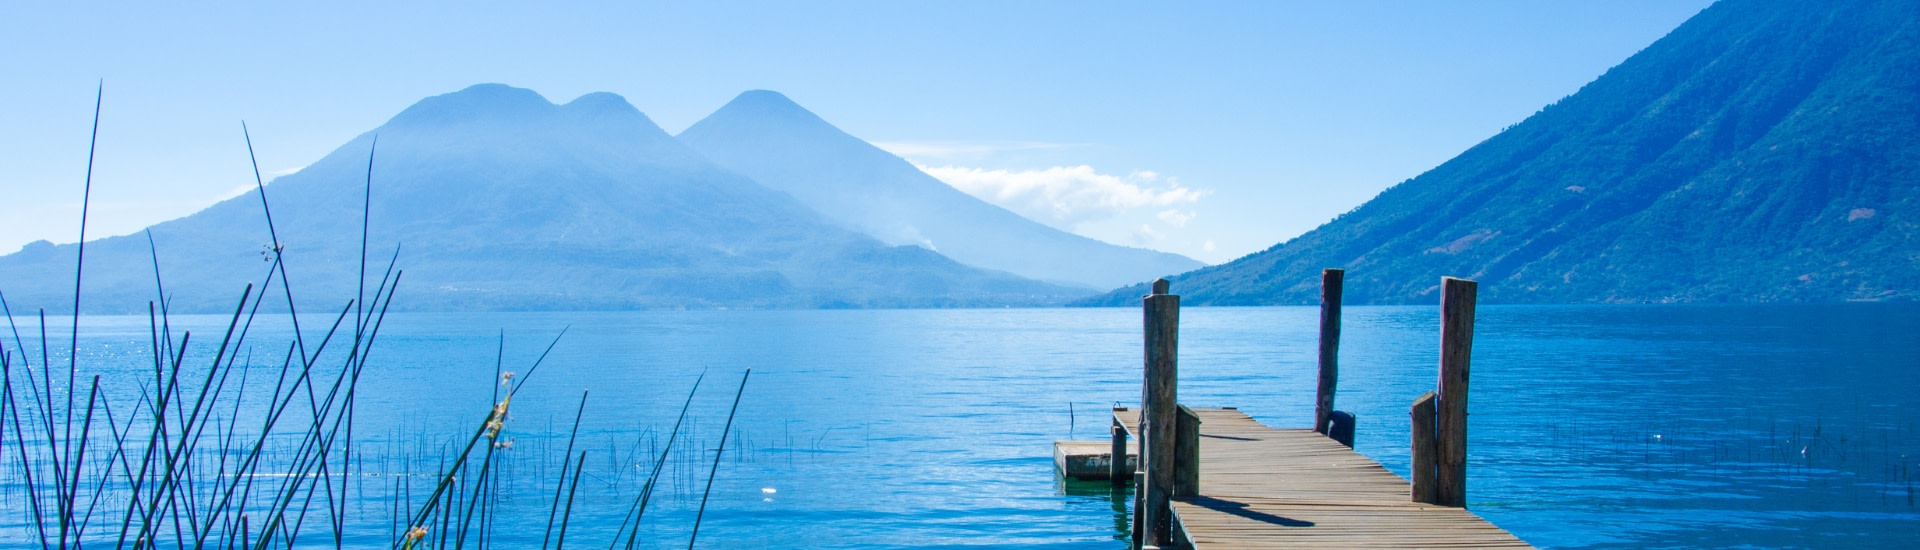 Dock and volcanoes at Lake Atitlan in Guatemala